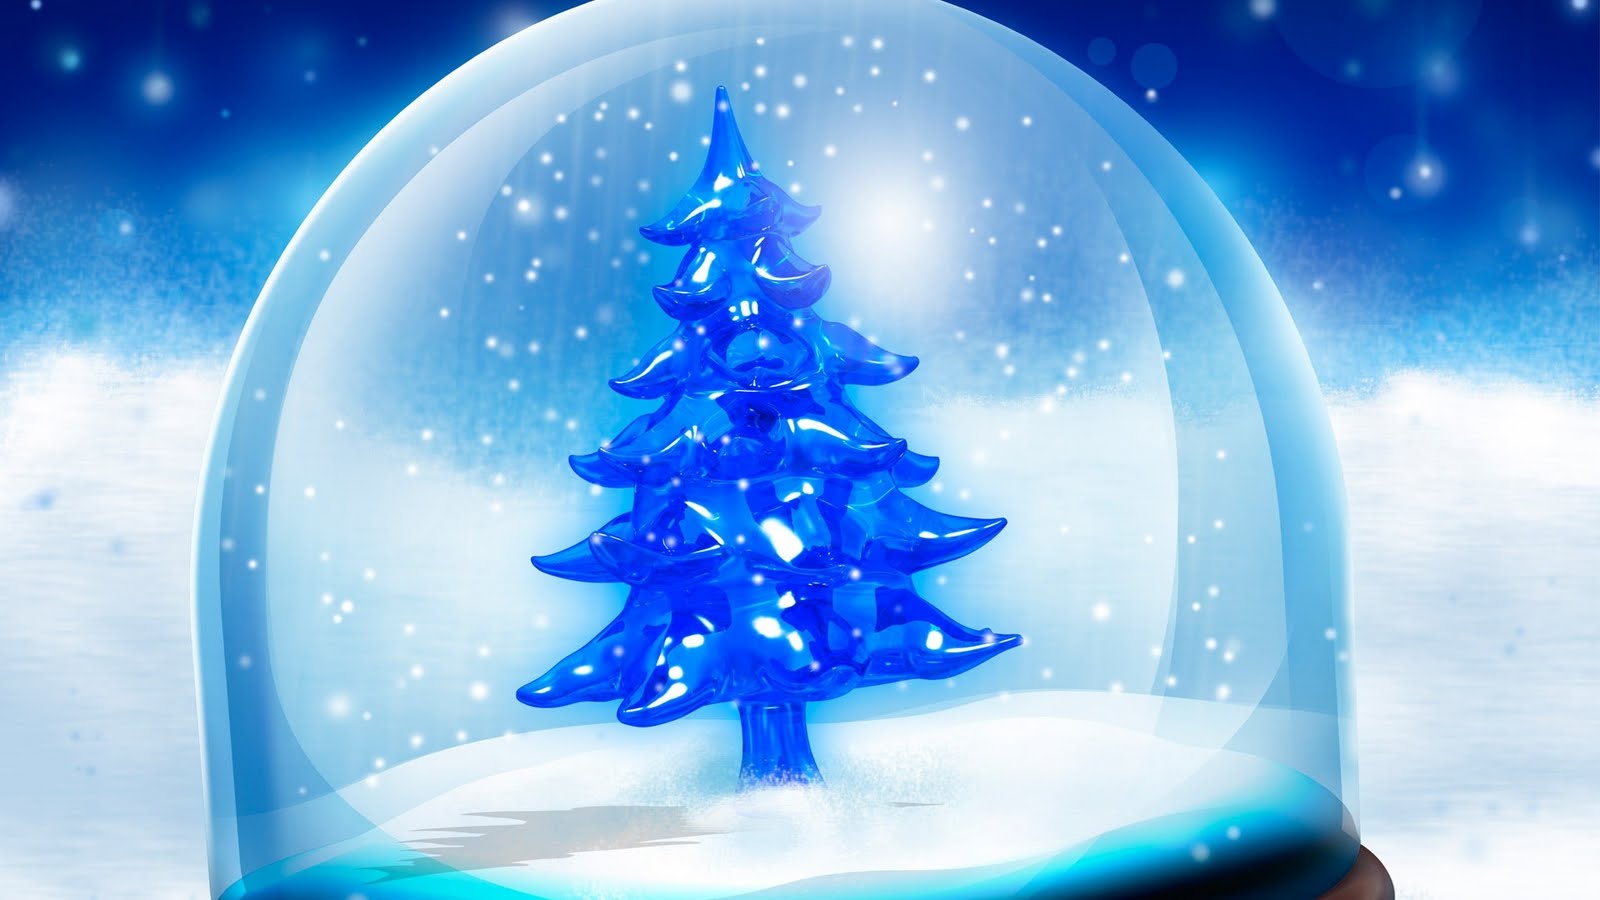 http://2.bp.blogspot.com/-ziqIAOF6mDk/TrgTnJav7JI/AAAAAAAAANo/dDoy9LUkw7E/s1600/snowy_christmas_tree-1920x1200.jpg